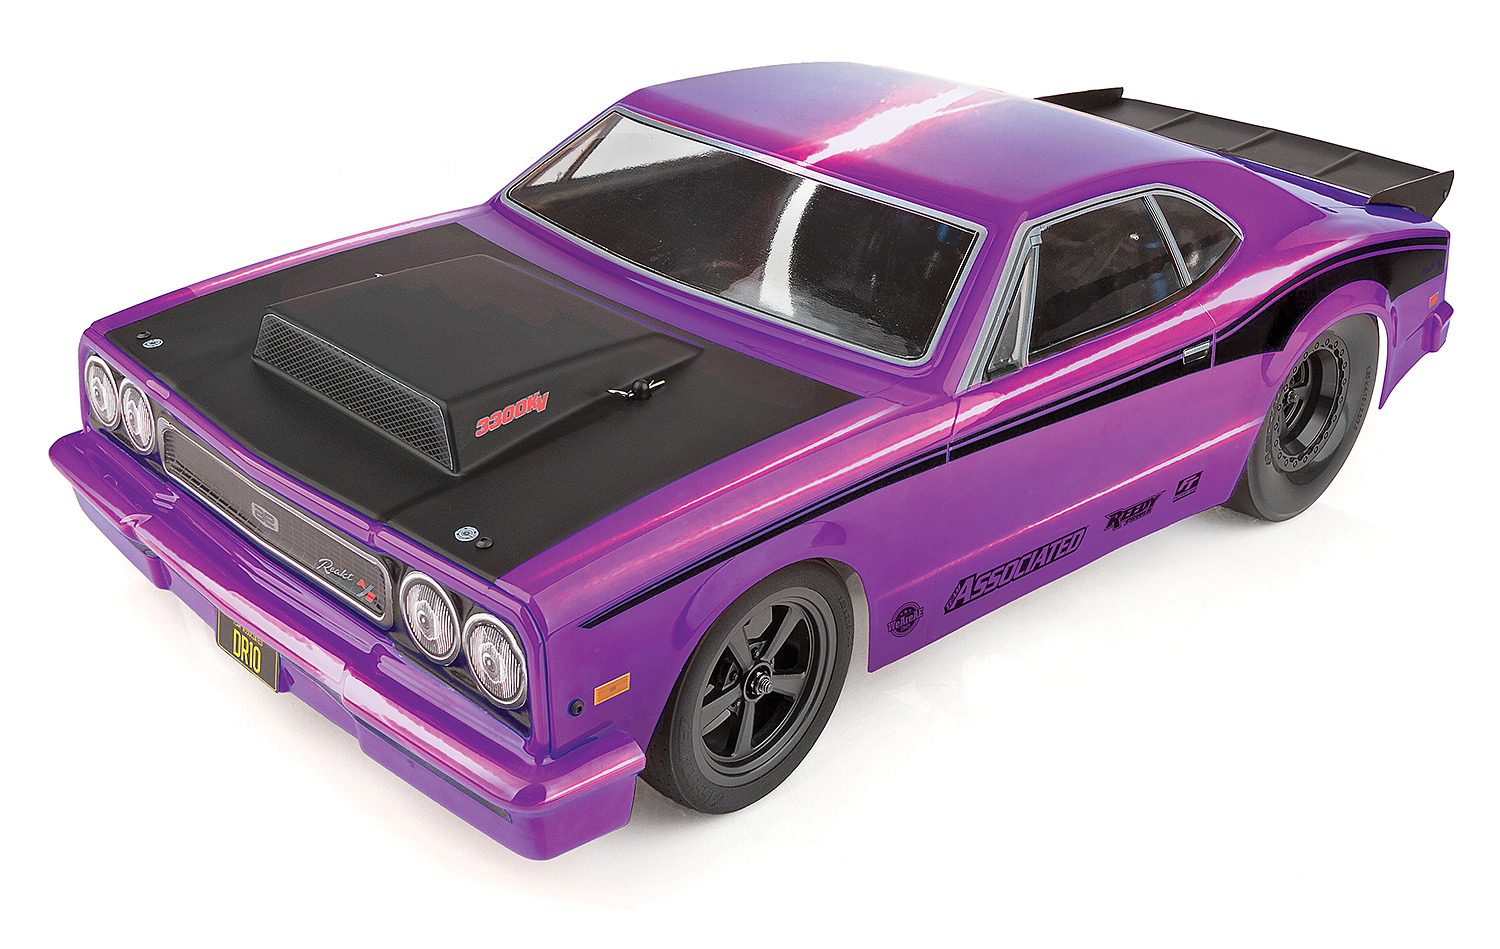 DR10 Drag Race Car RTR, 3S LiPo Combo, purple body